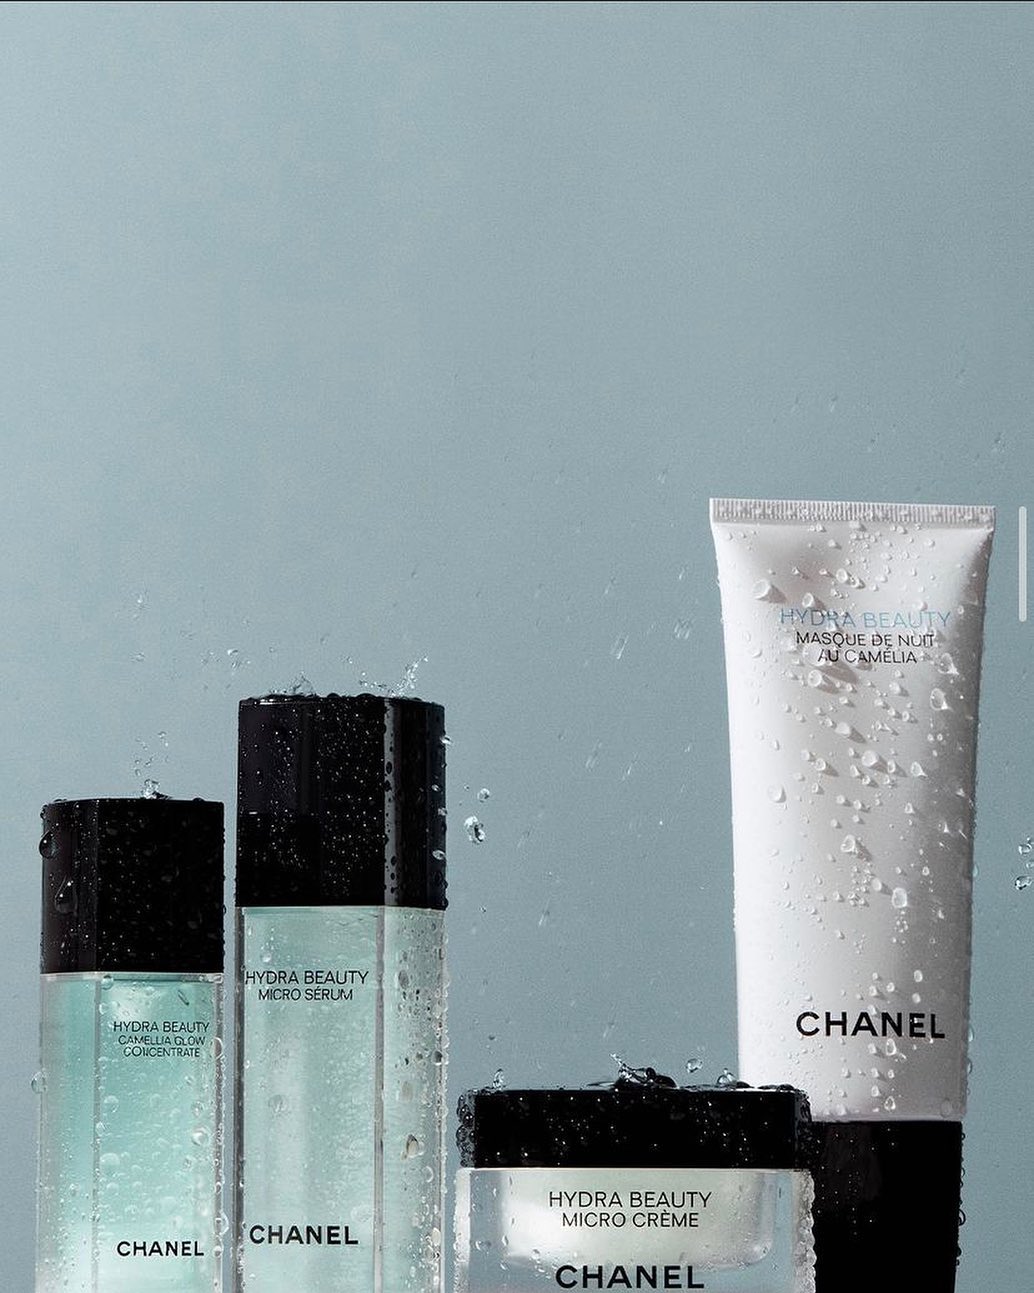 Chanel 为旗下两大畅销美容系列产品打造环保瓶盖